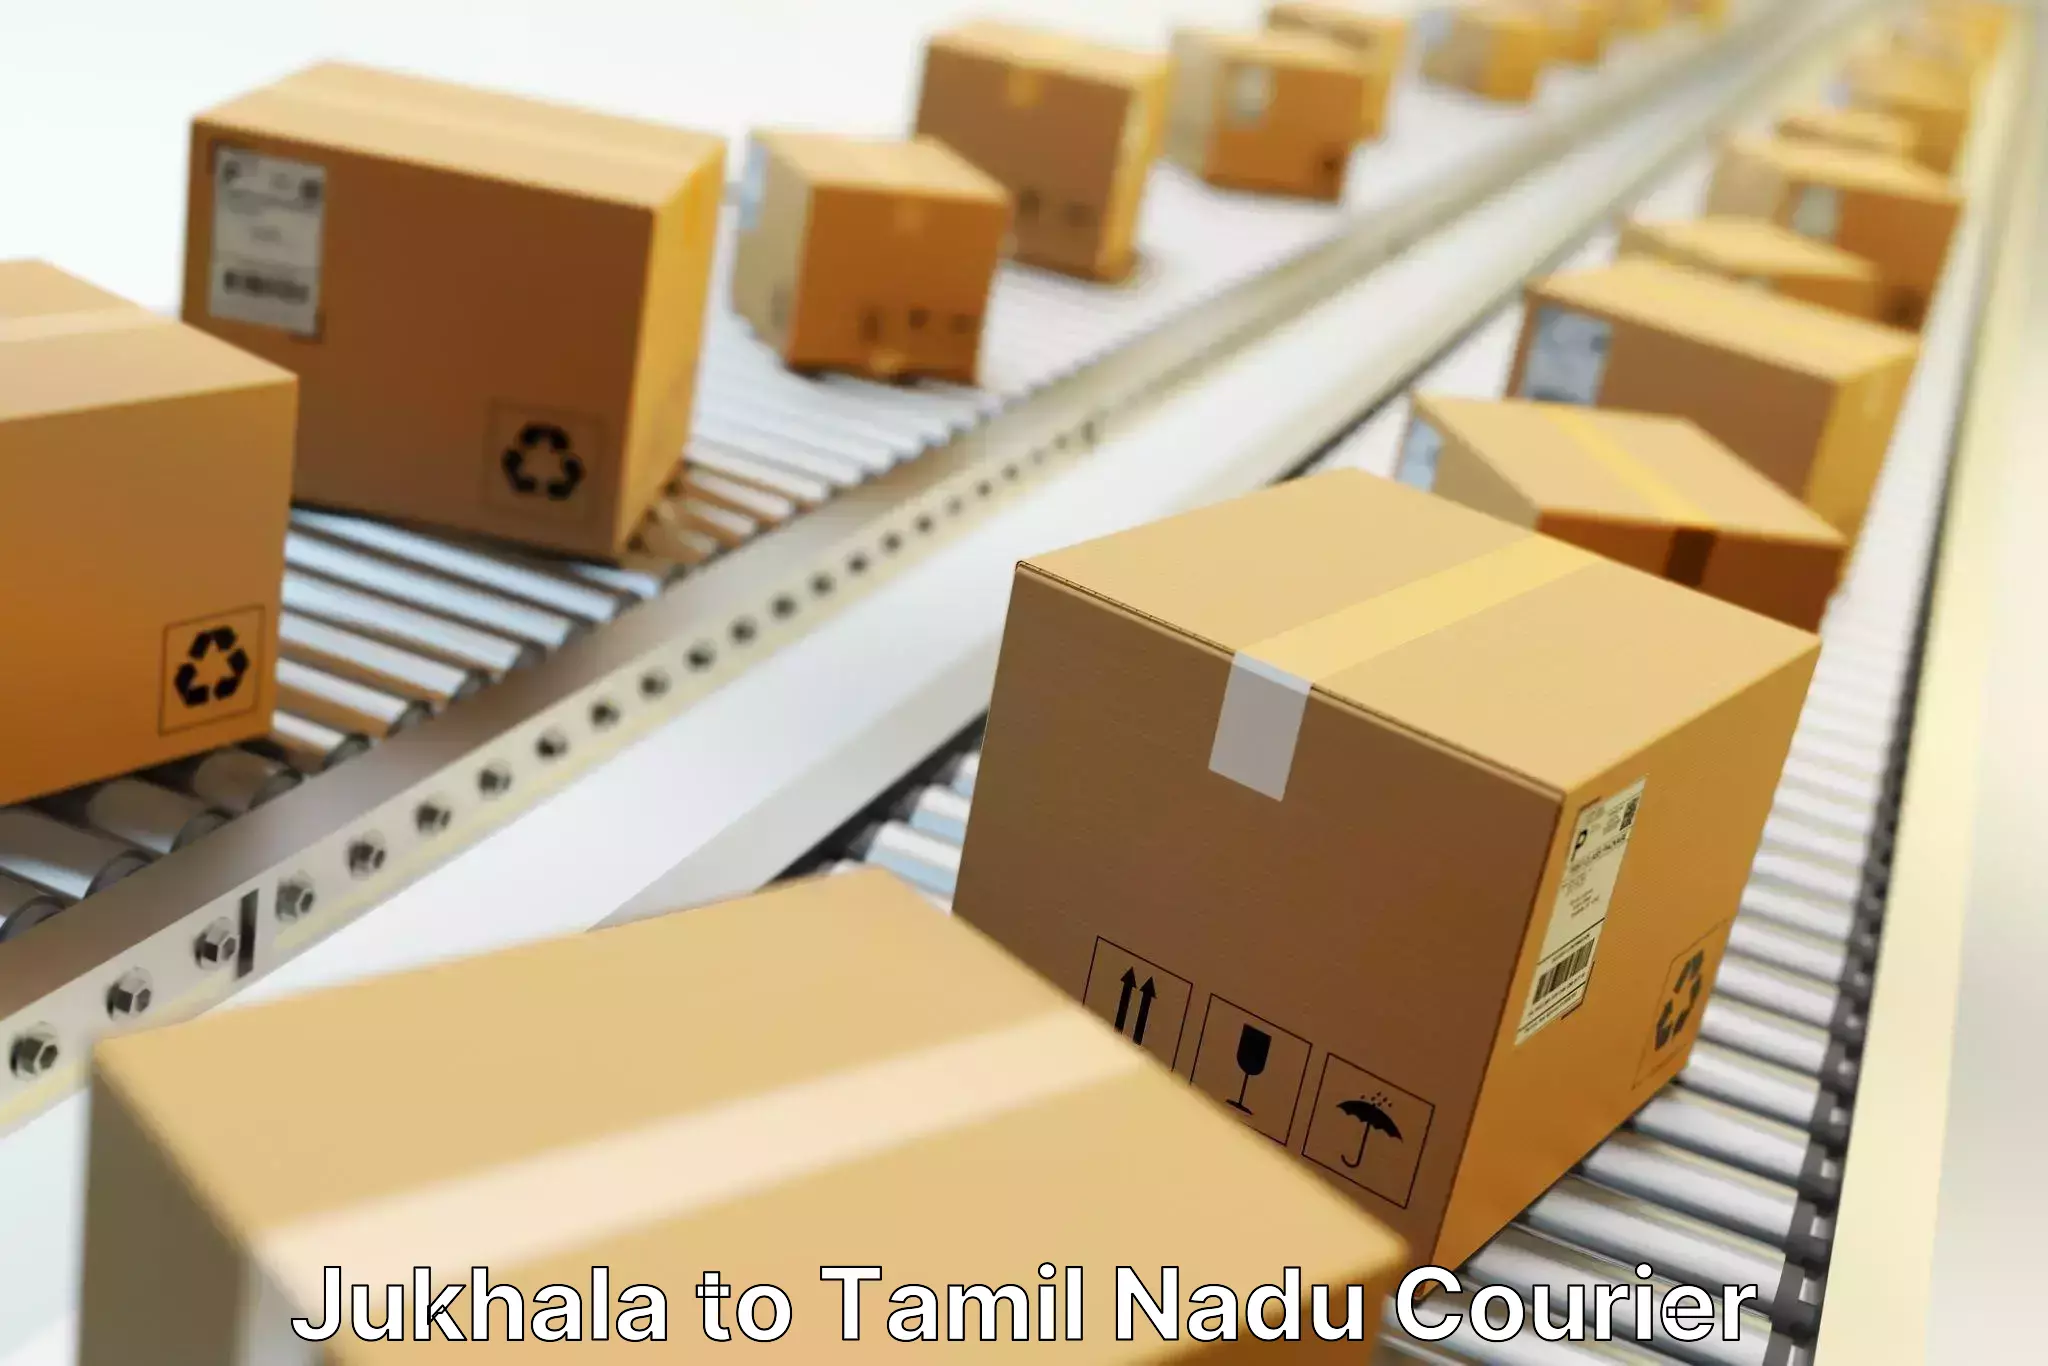 Premium courier services Jukhala to Ennore Port Chennai